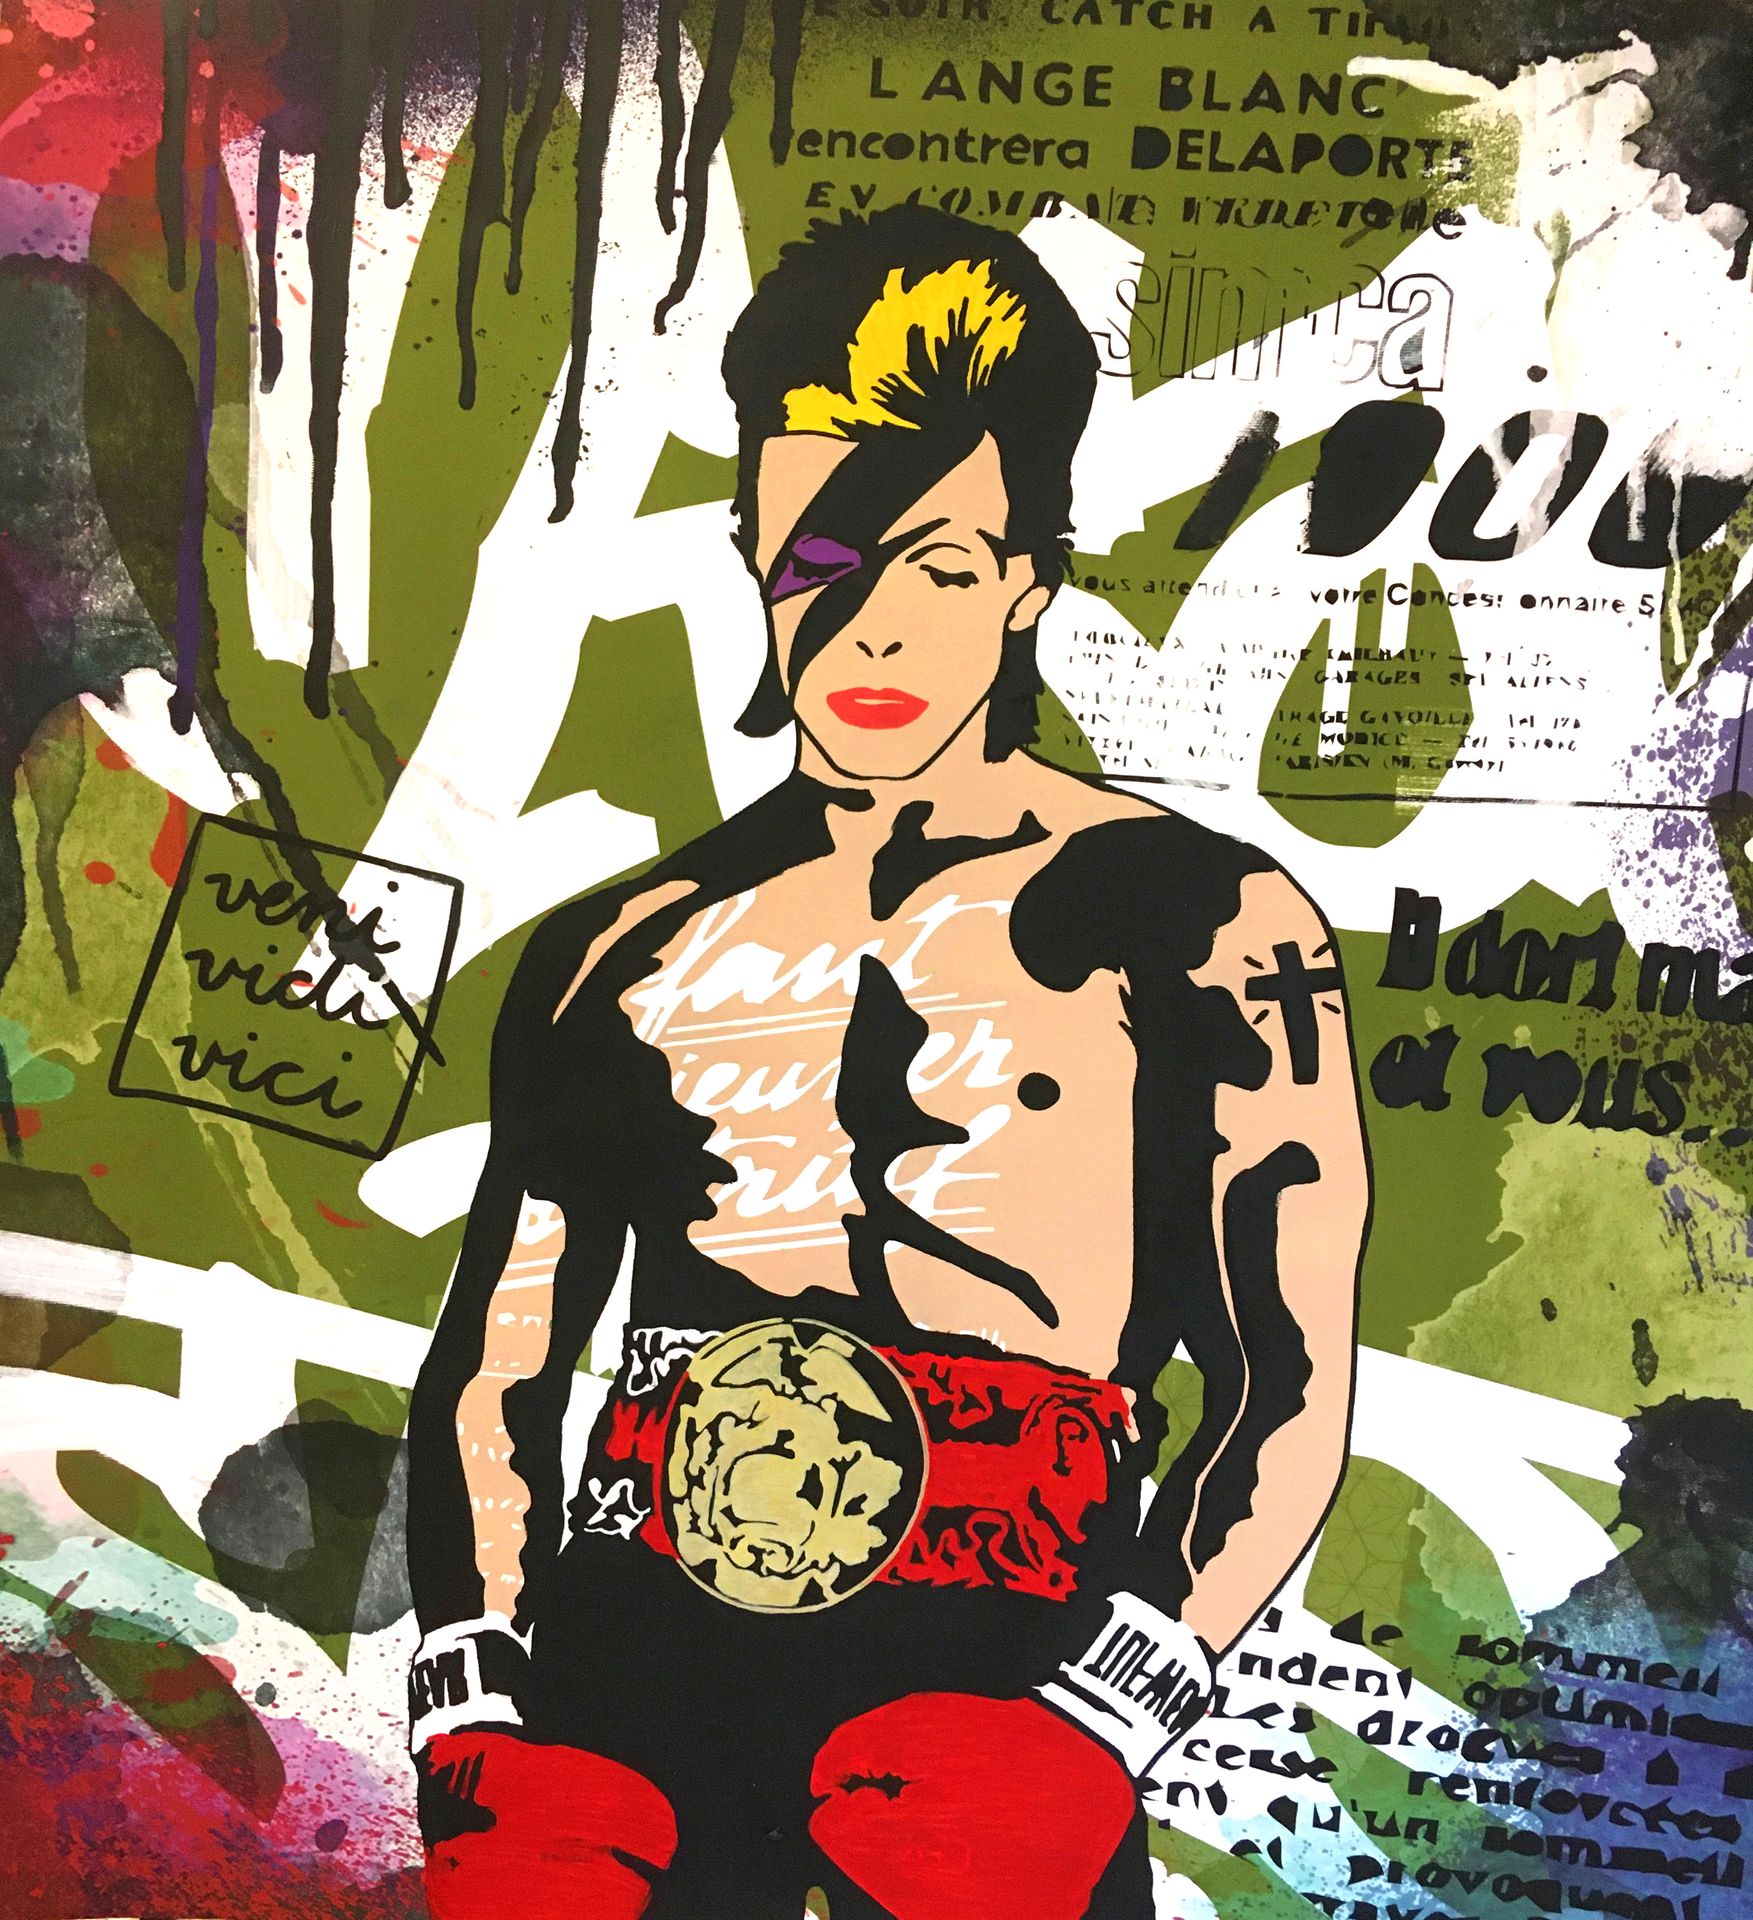 MISAKO 艺术家：Misako

标题：鲍伊拳击手，2021年

手法：墨水，丙烯酸，波斯卡，喷雾，模板

支持：棉帆布和木框

尺寸：80 x 80 cm